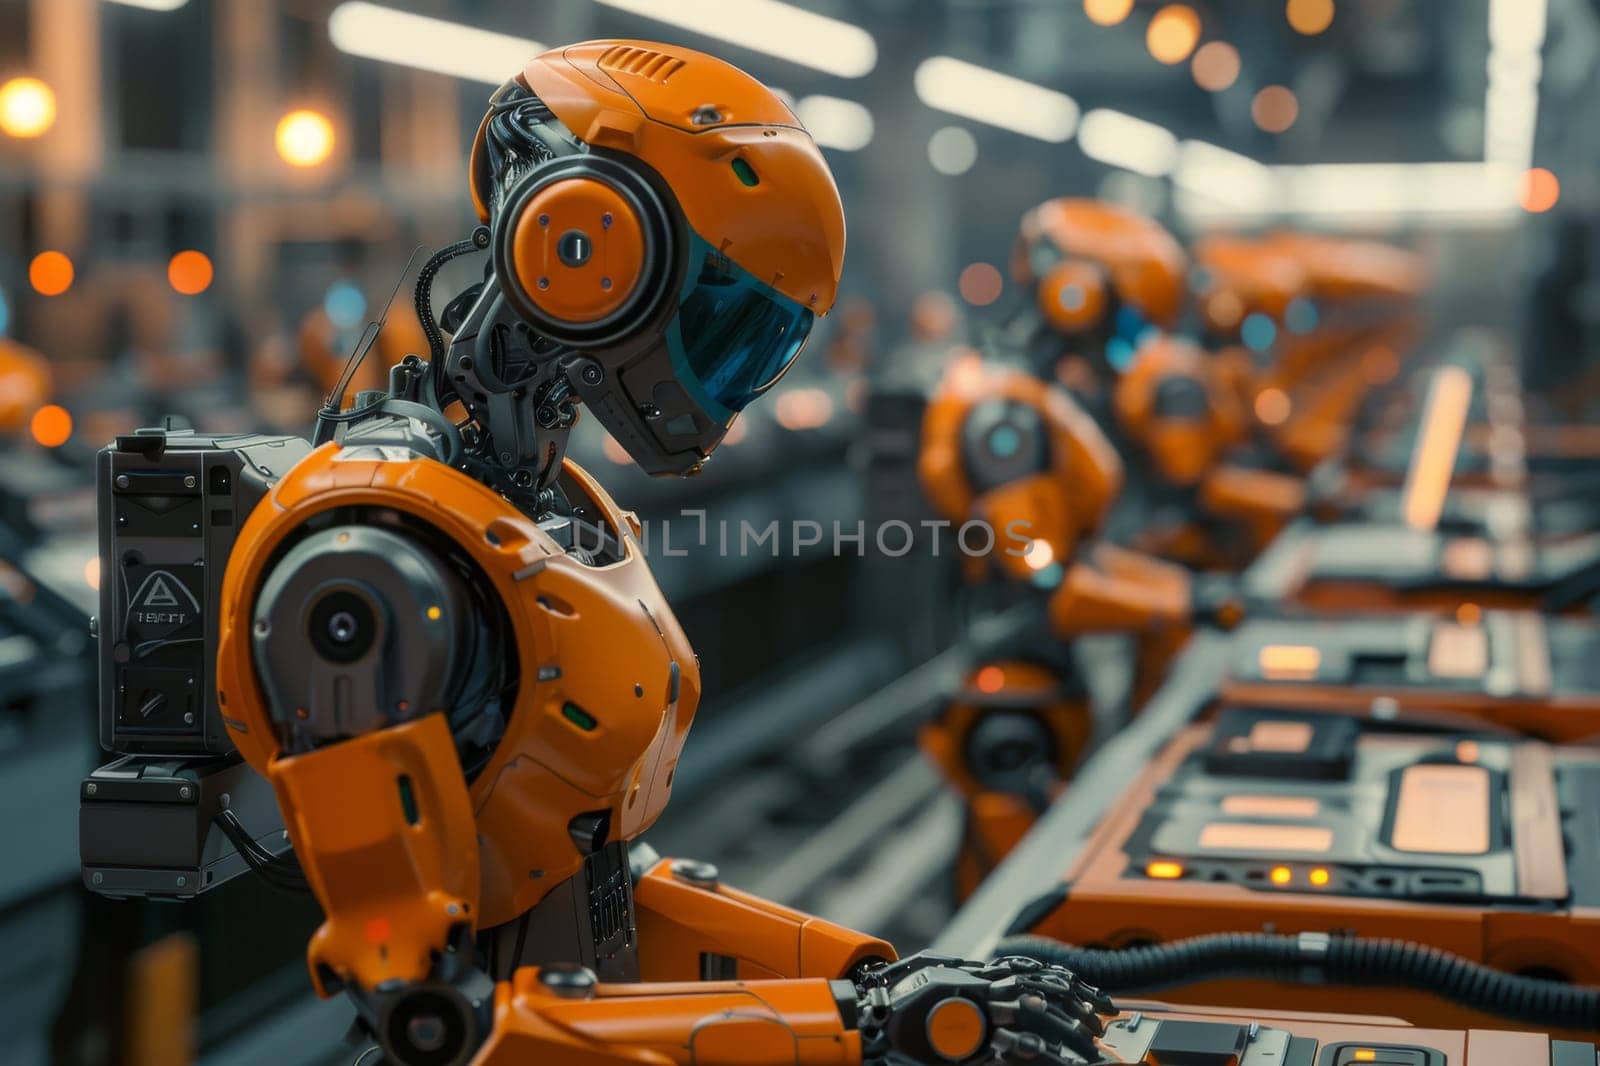 Futuristic Robot working in Production Line. Generative AI.